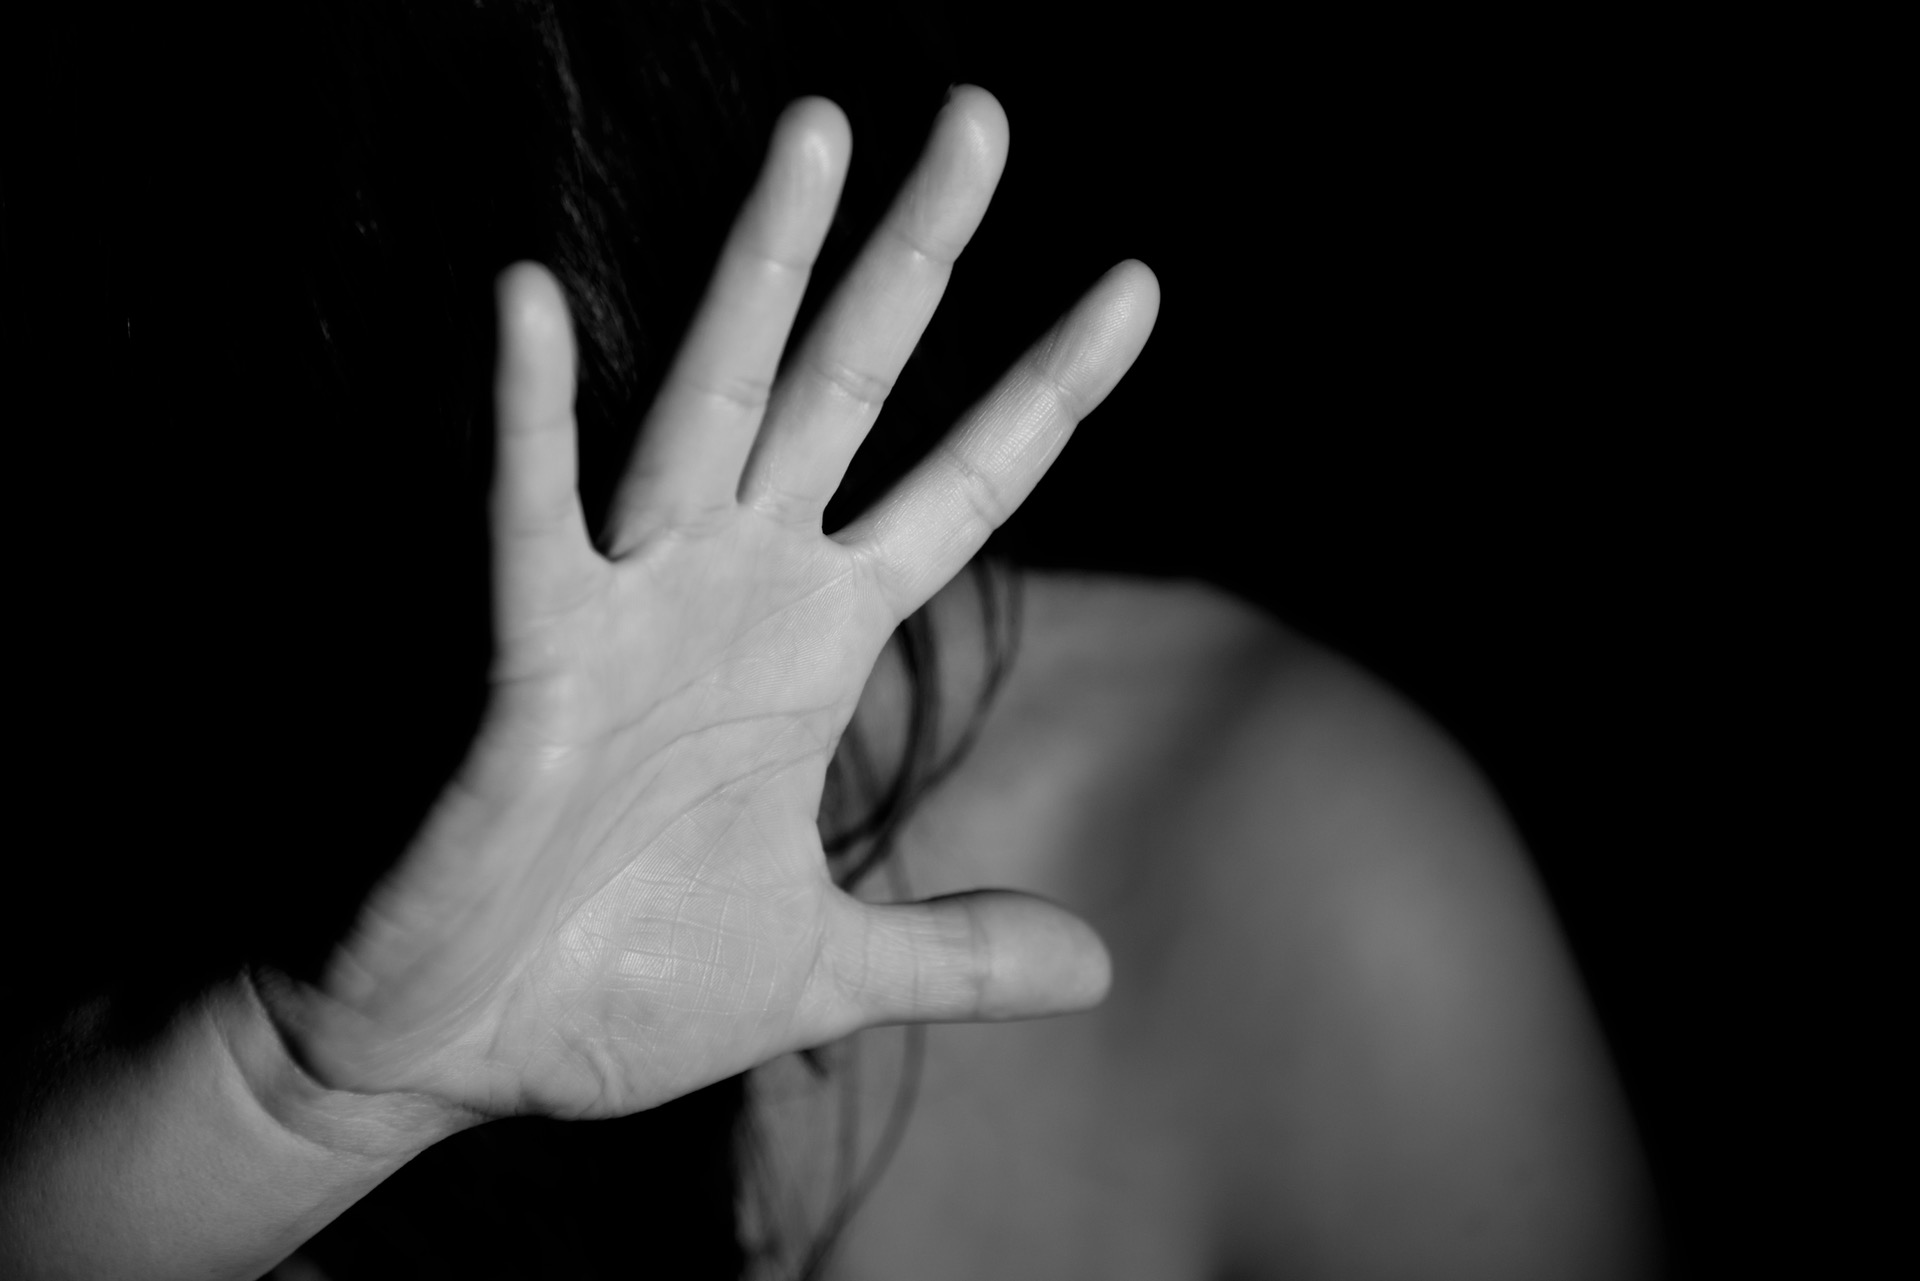 QLD government launches LGBTI domestic violence awareness campaign